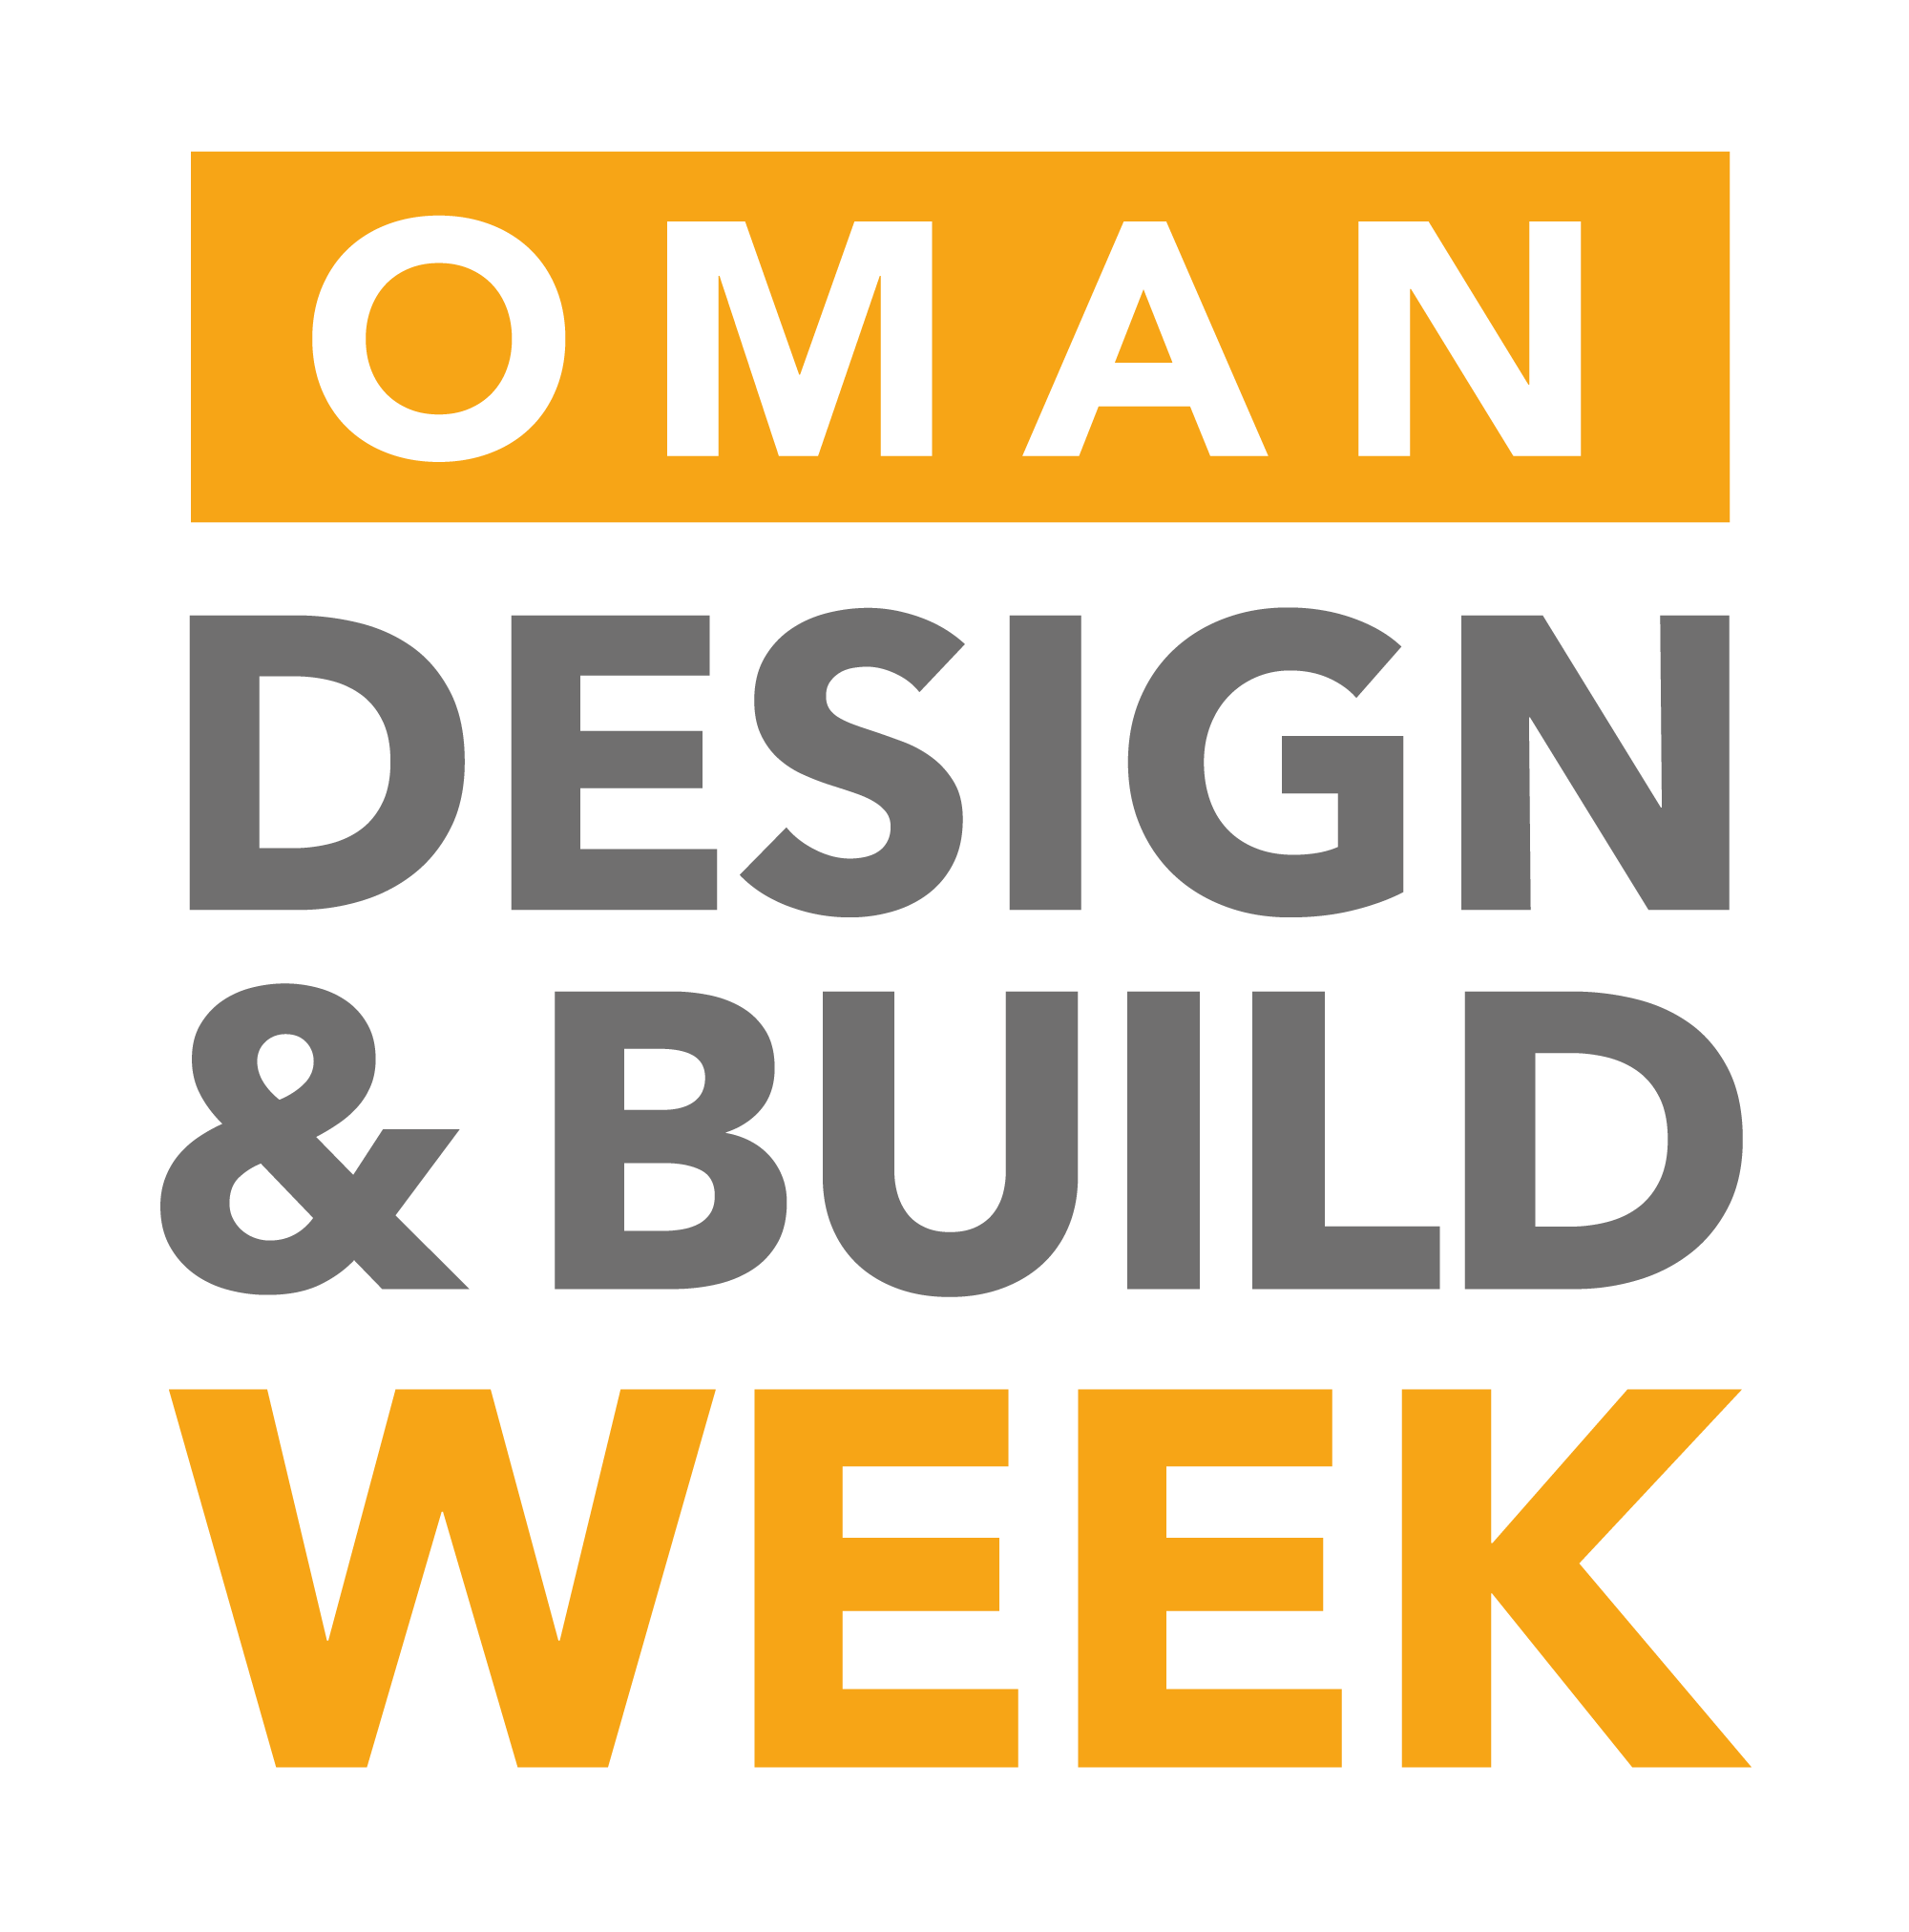 OMAN DESIGN & BUILD WEEK - 30 MARCH - 1 APRIL 2020